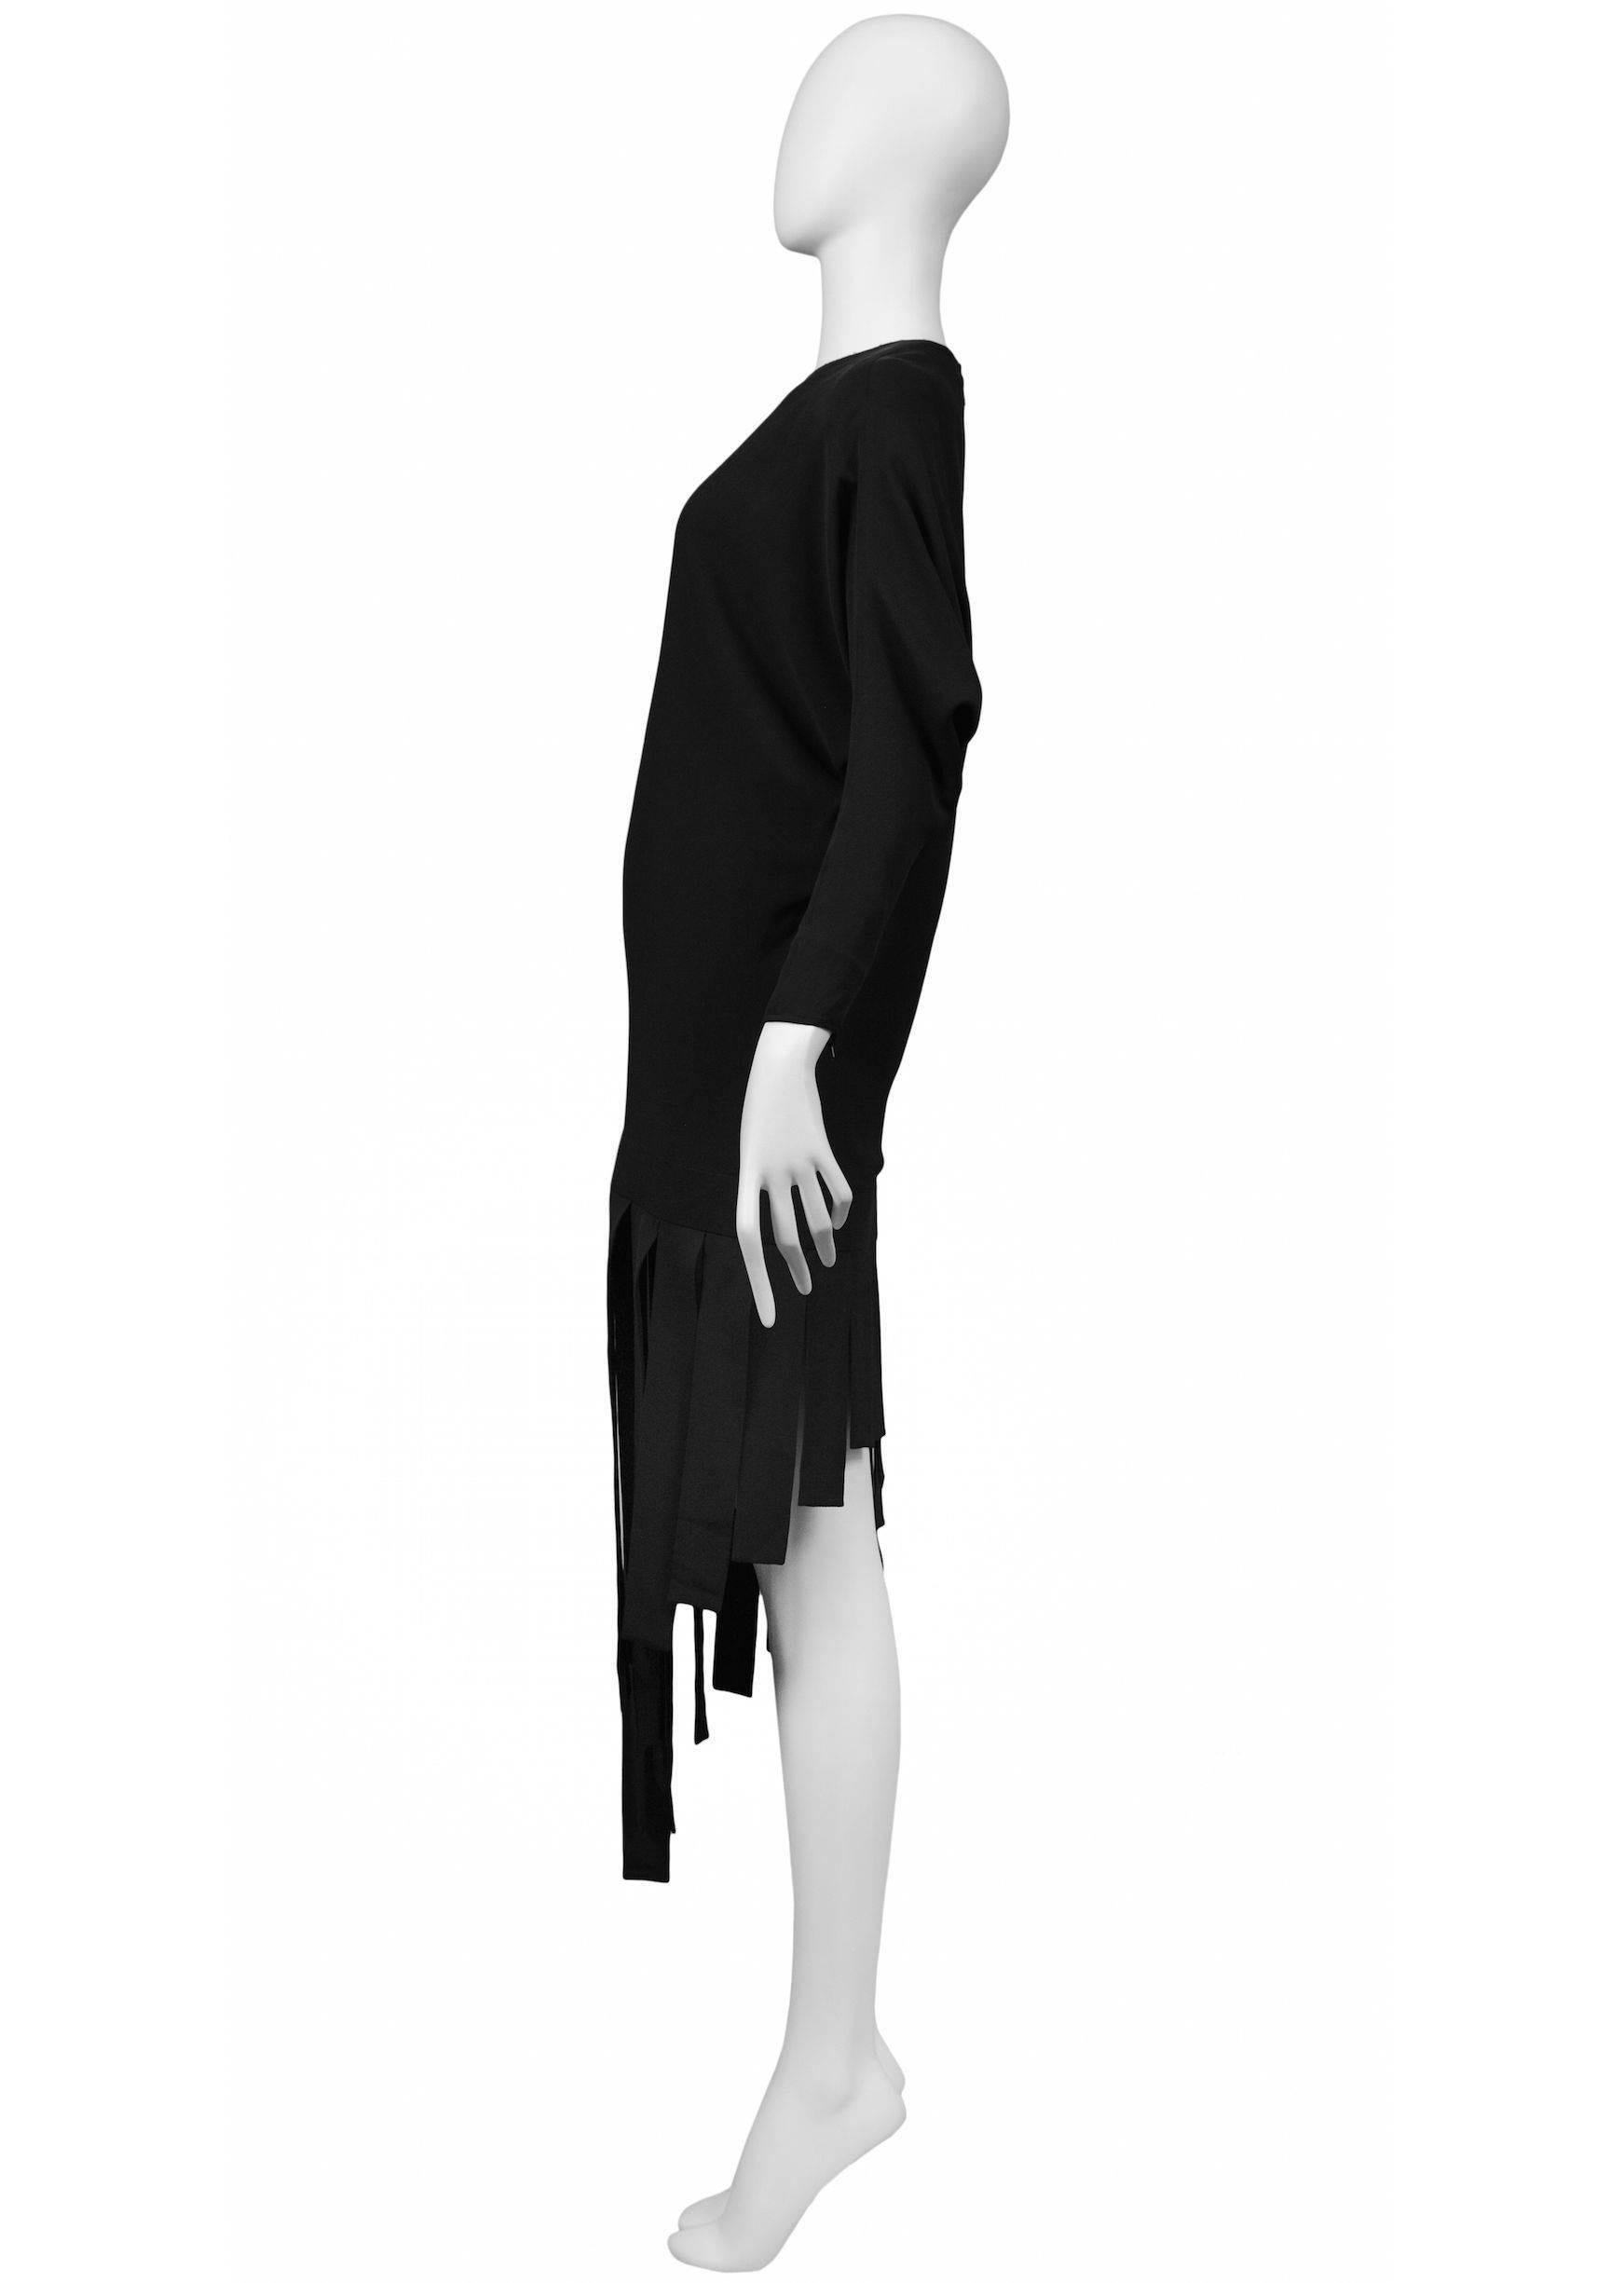 Women's Pierre Cardin Couture Black Carwash Dress